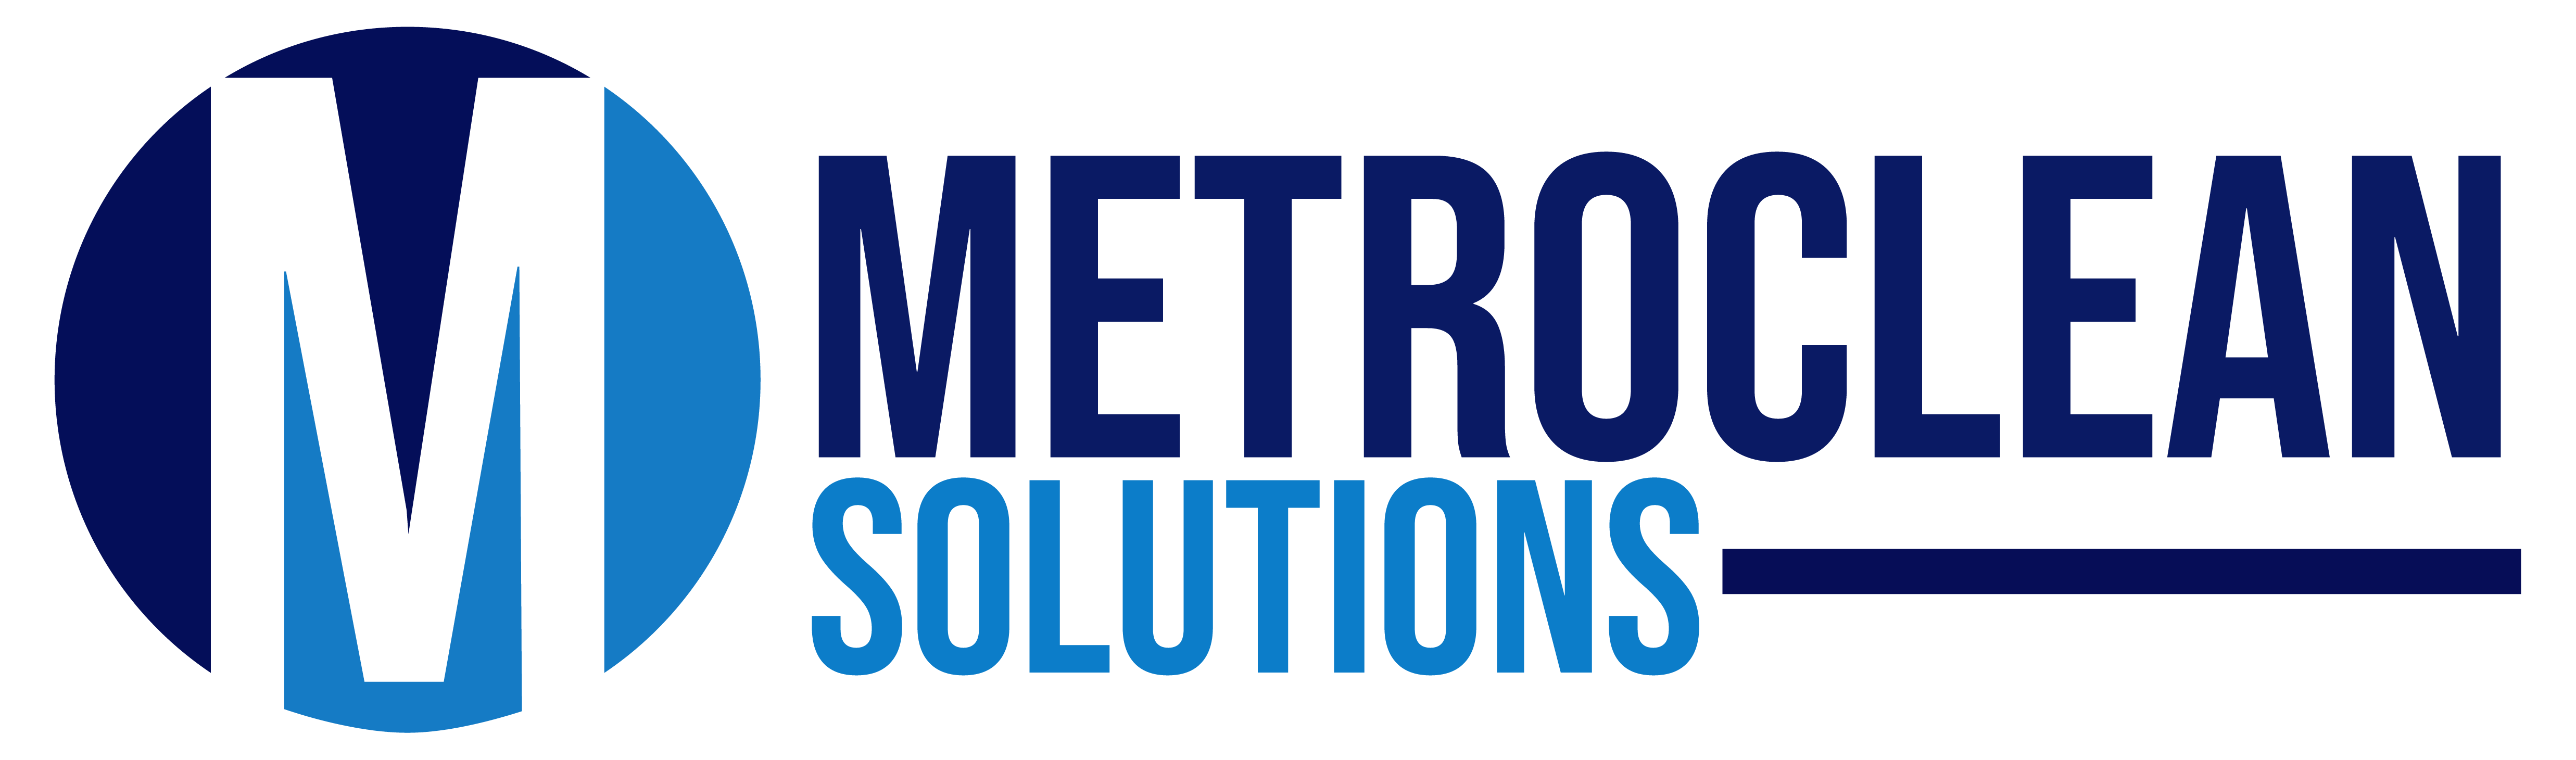 MetroClean-Solutions-logo.png